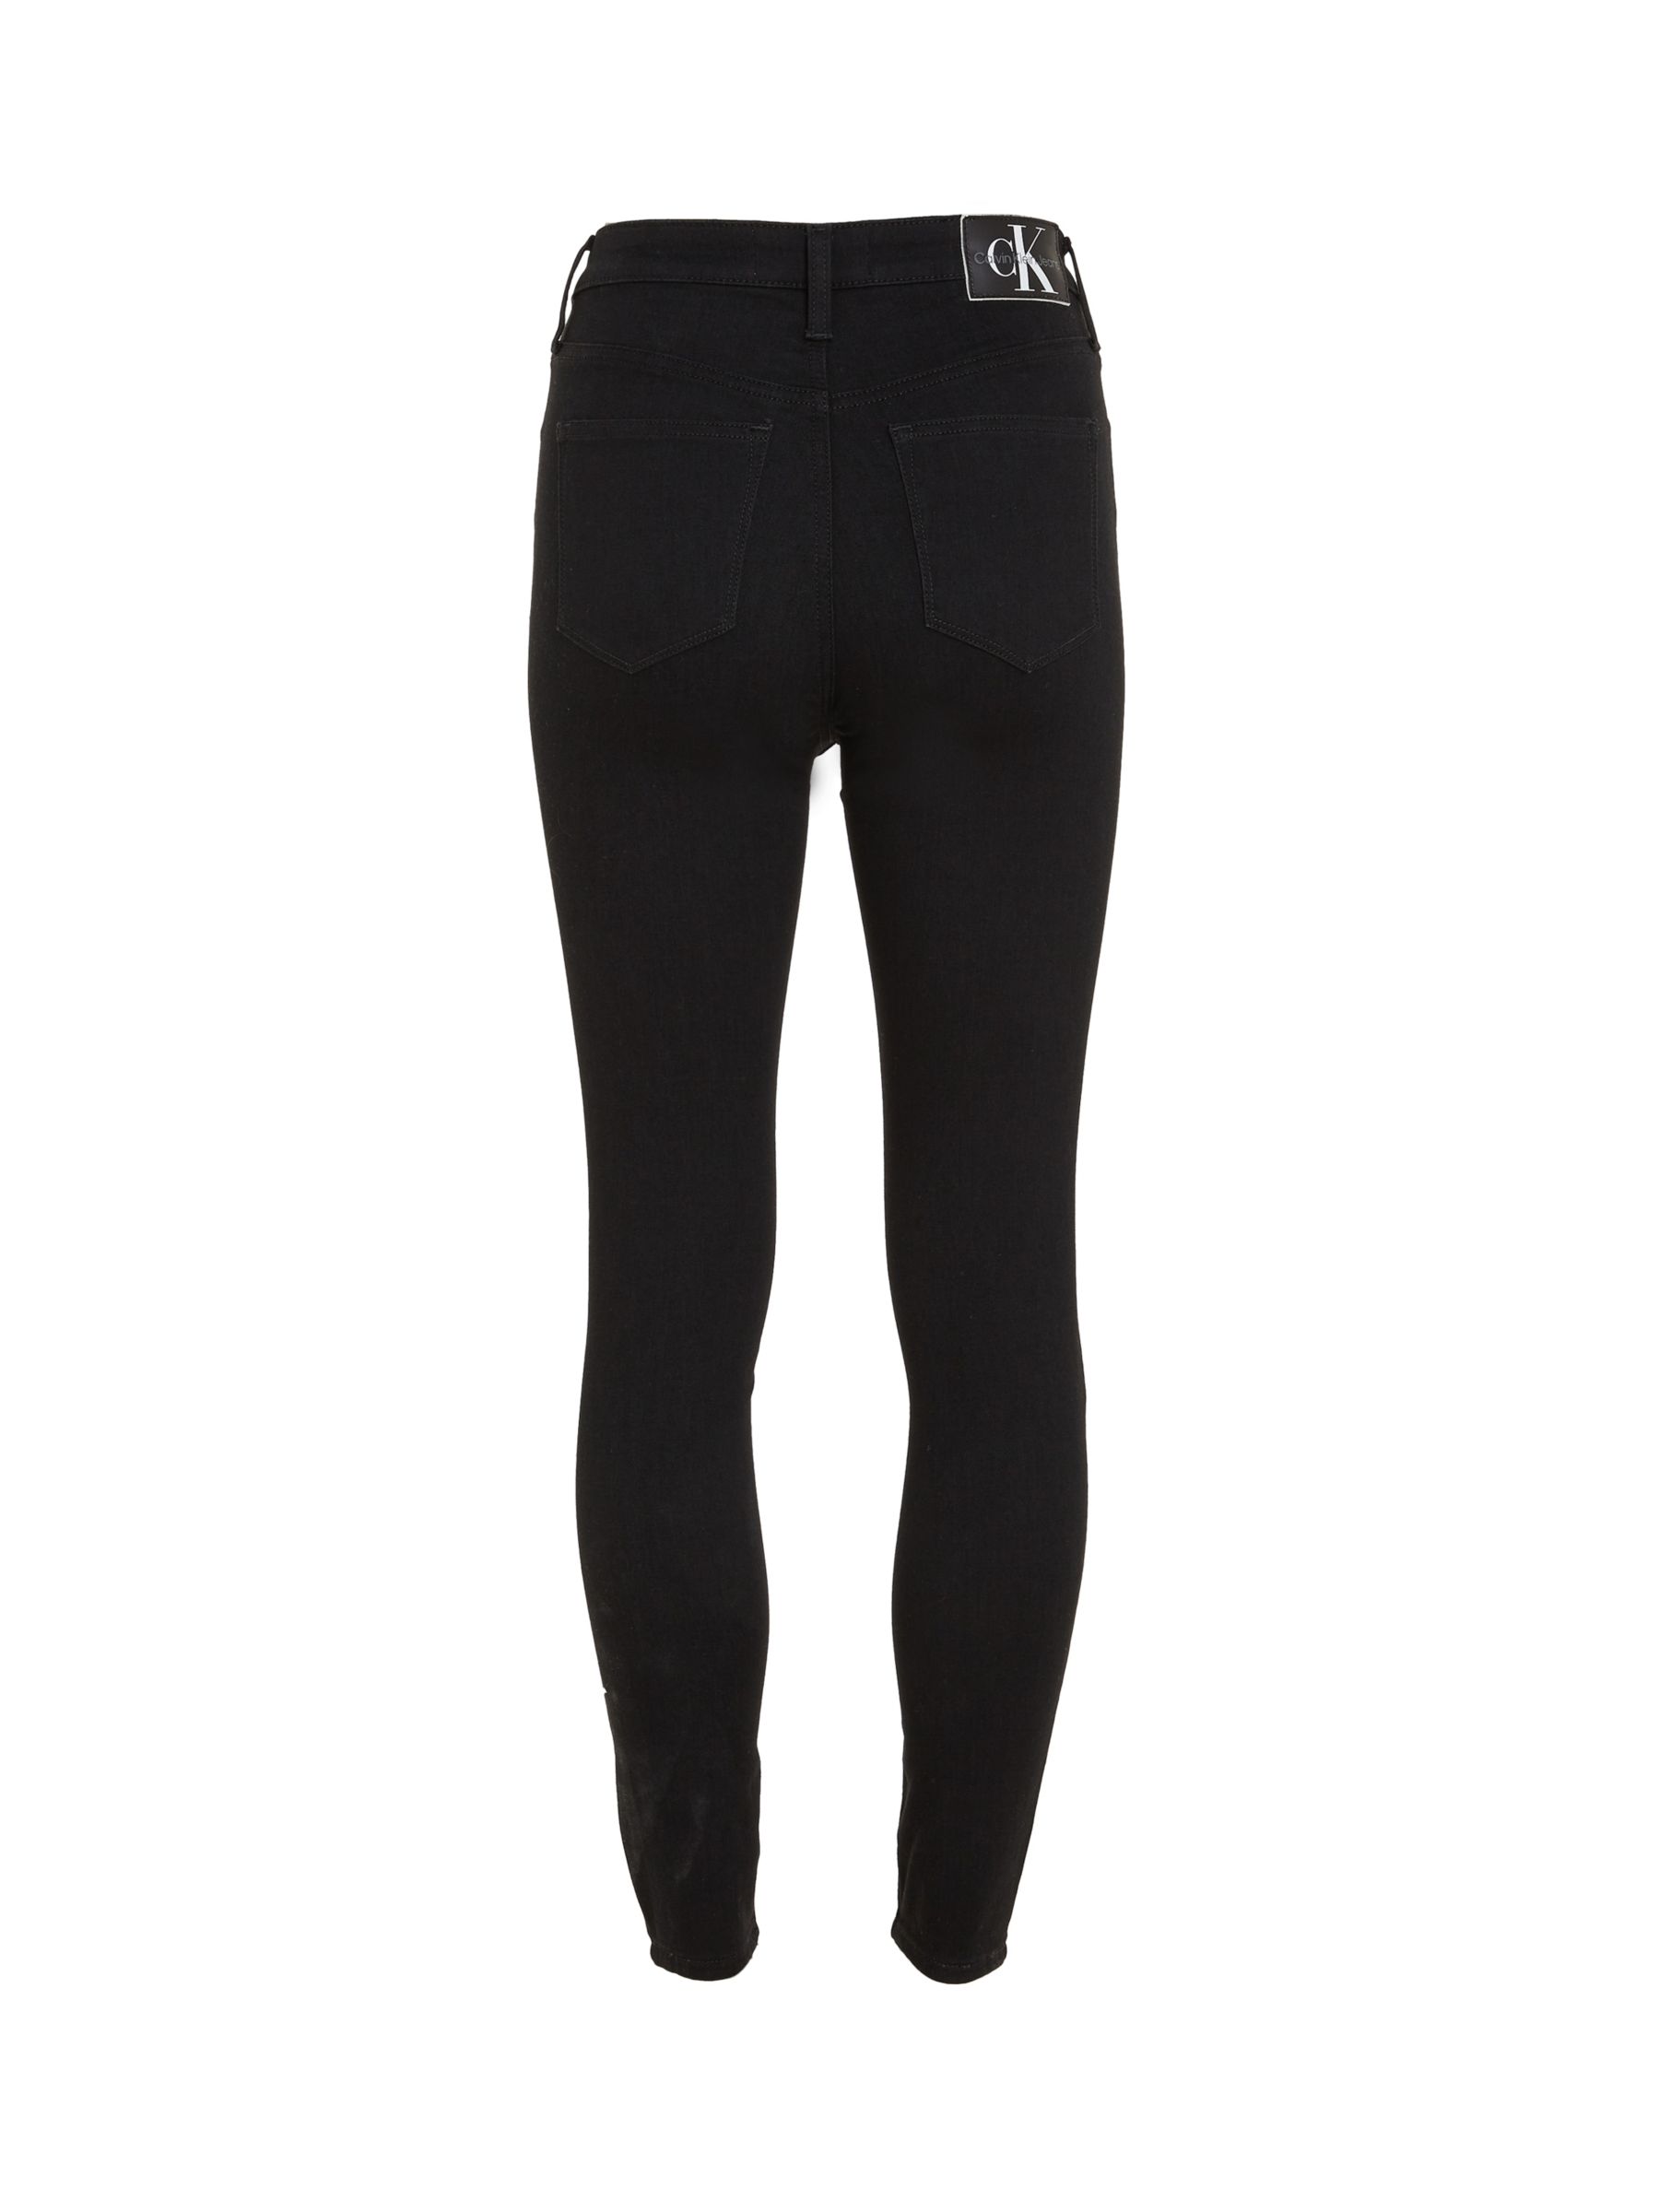 Calvin Klein High Rise Super Skinny Jeans, Black, 25R